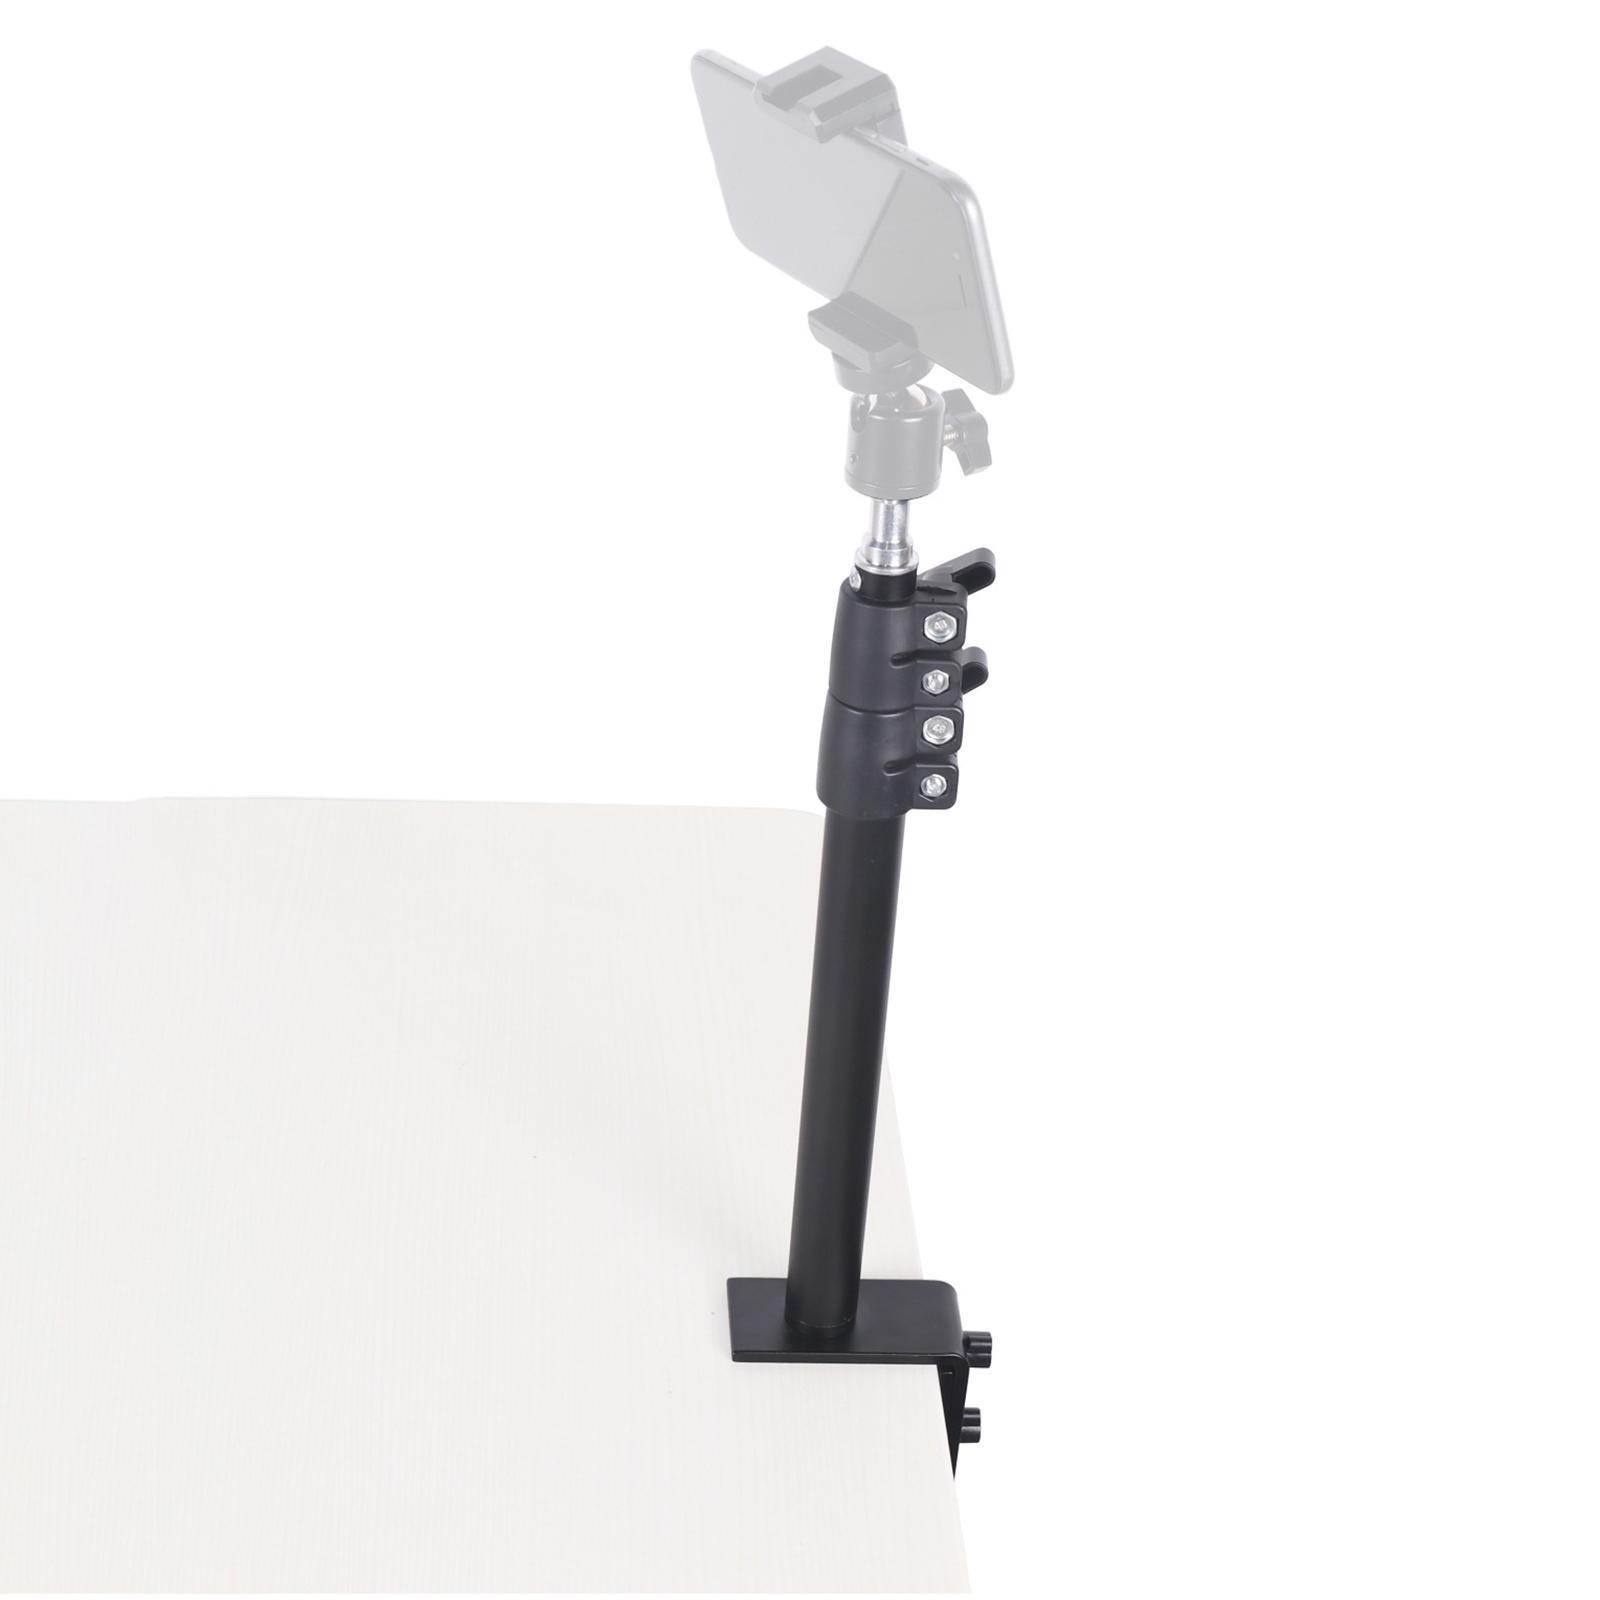 46-74cm Camera Desk Mount Tabletop Bracket Stand Aluminum for camera